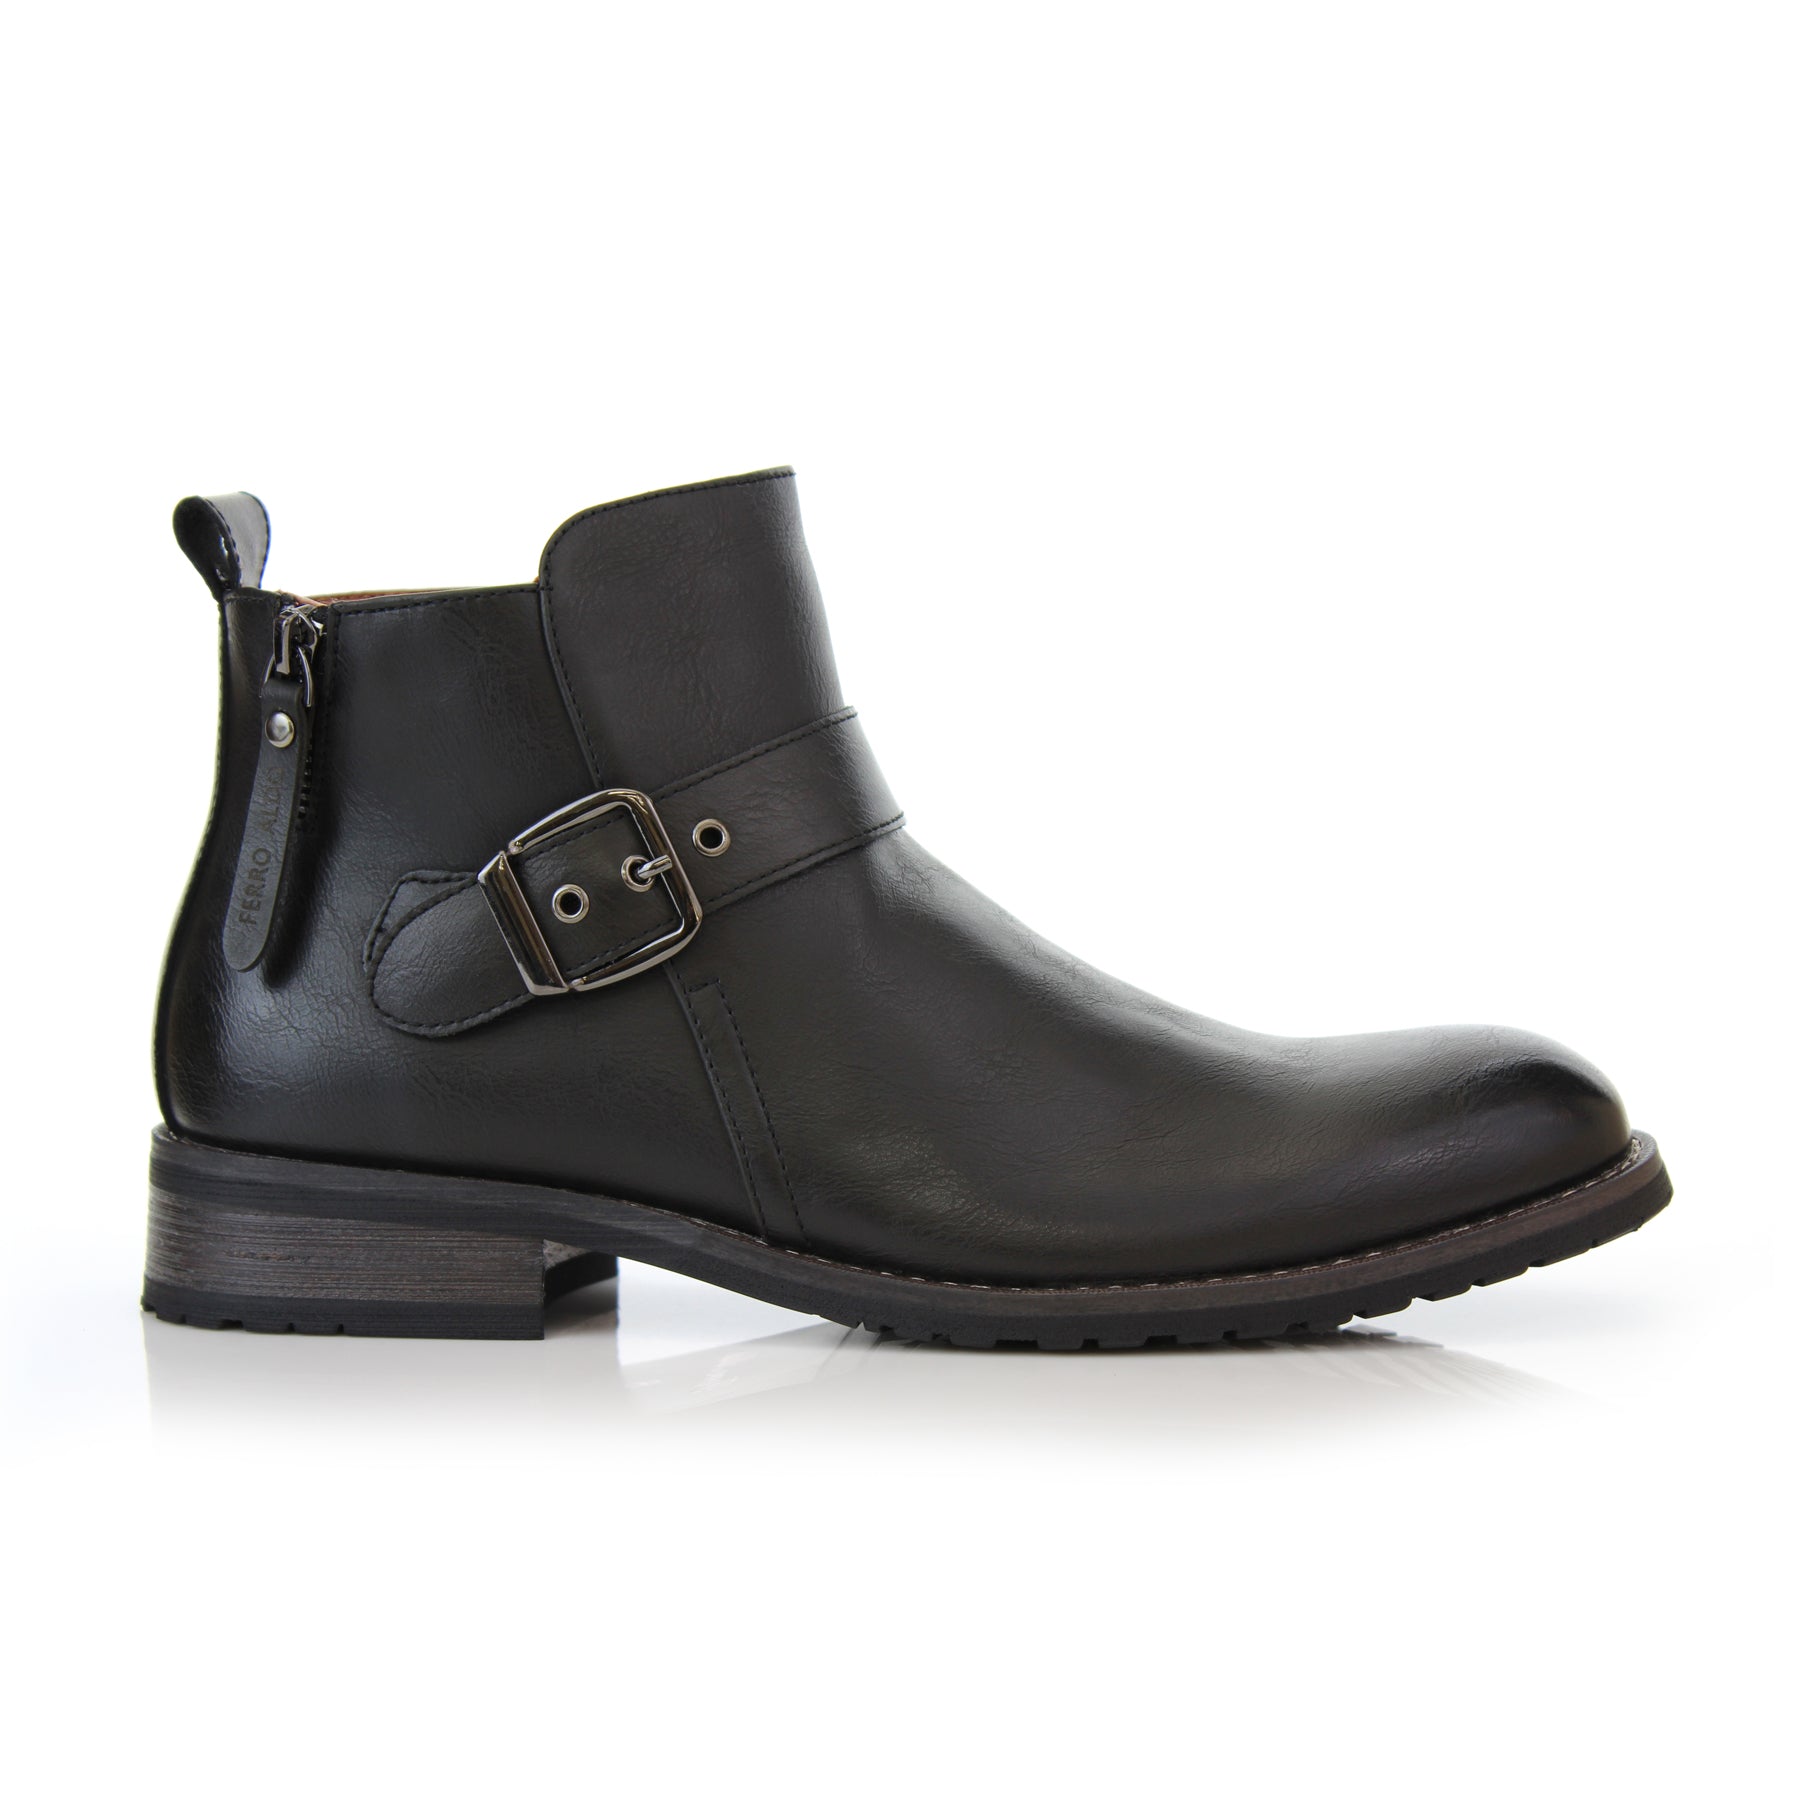 Slip-On Buckle Chelsea Boots | Dalton by Ferro Aldo | Conal Footwear | Outer Side Angle View